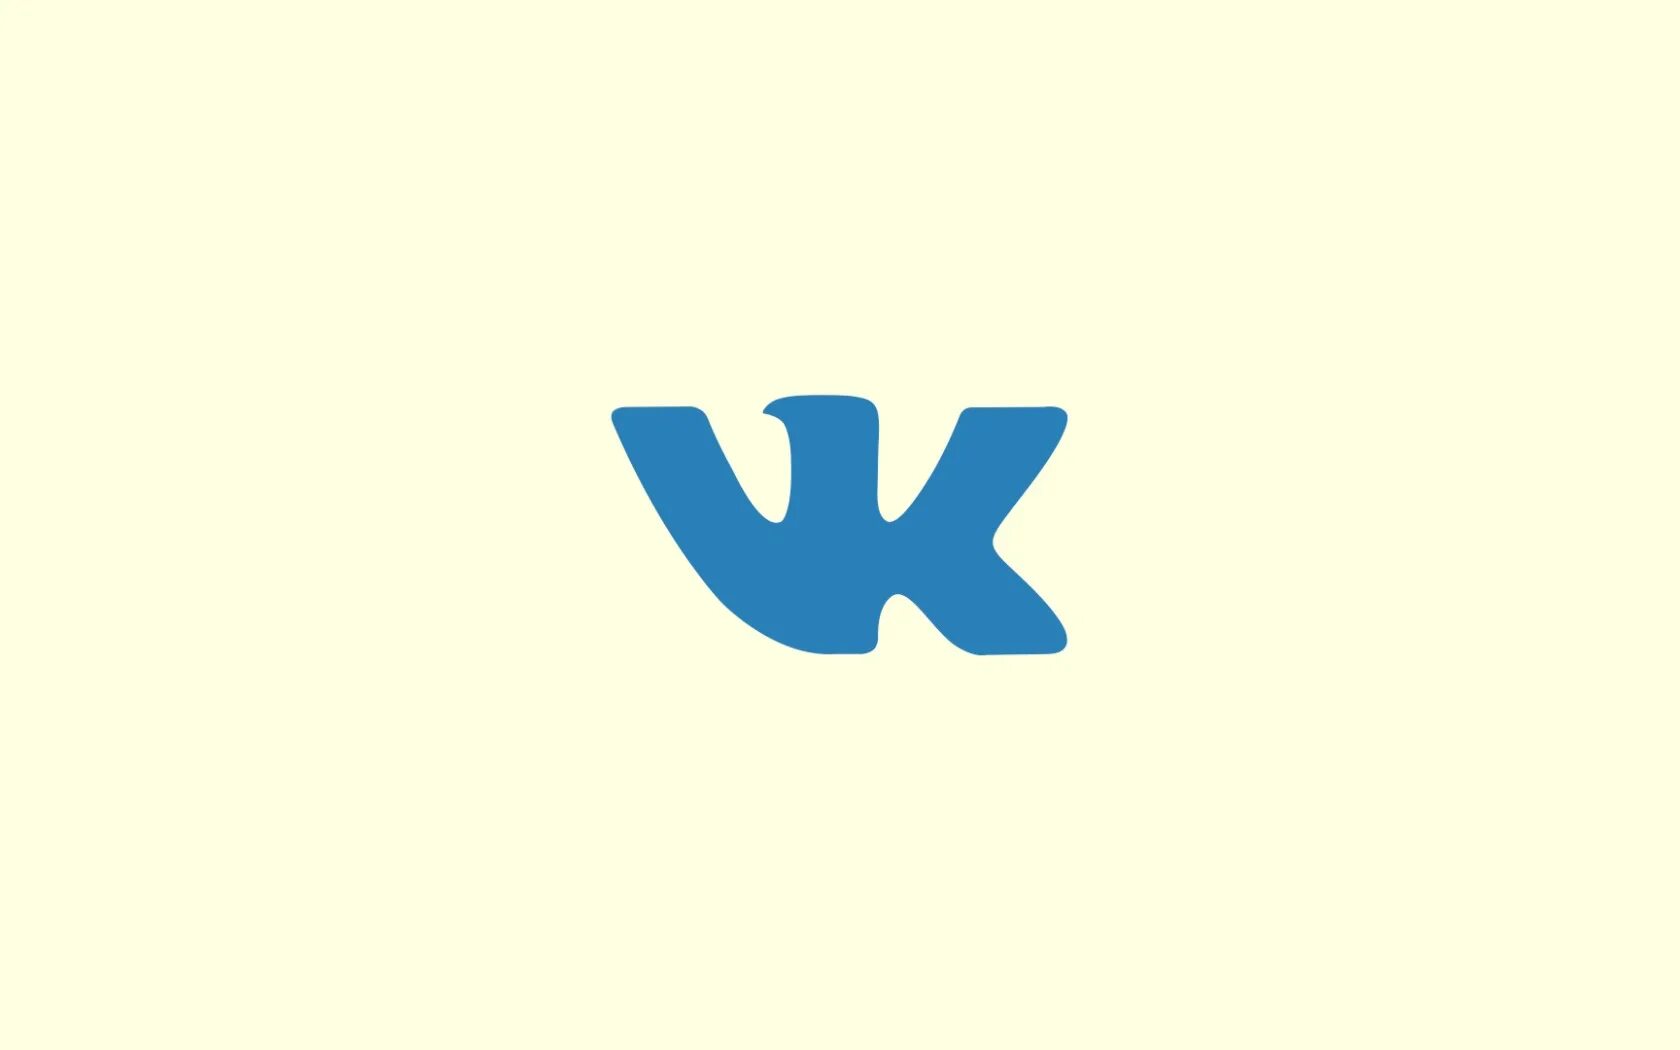 Vk com ozerskvibiraetkomfort. Логотип ВК. Маленький значок ВК. Значок ВКОНТАКТЕ на прозрачном фоне. Значок ВК без фона.